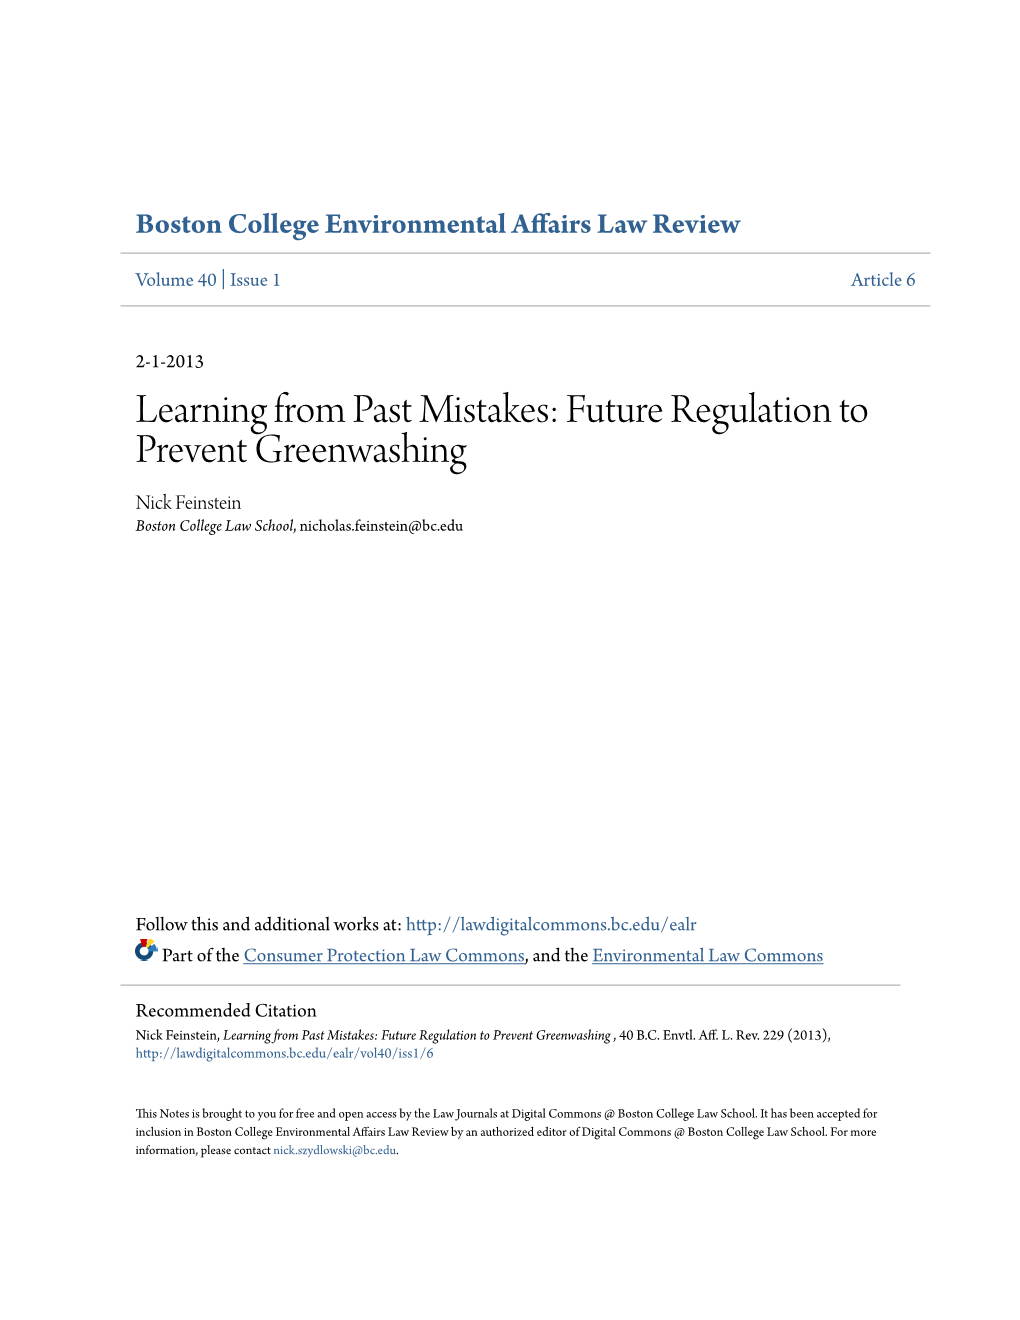 Learning from Past Mistakes: Future Regulation to Prevent Greenwashing Nick Feinstein Boston College Law School, Nicholas.Feinstein@Bc.Edu